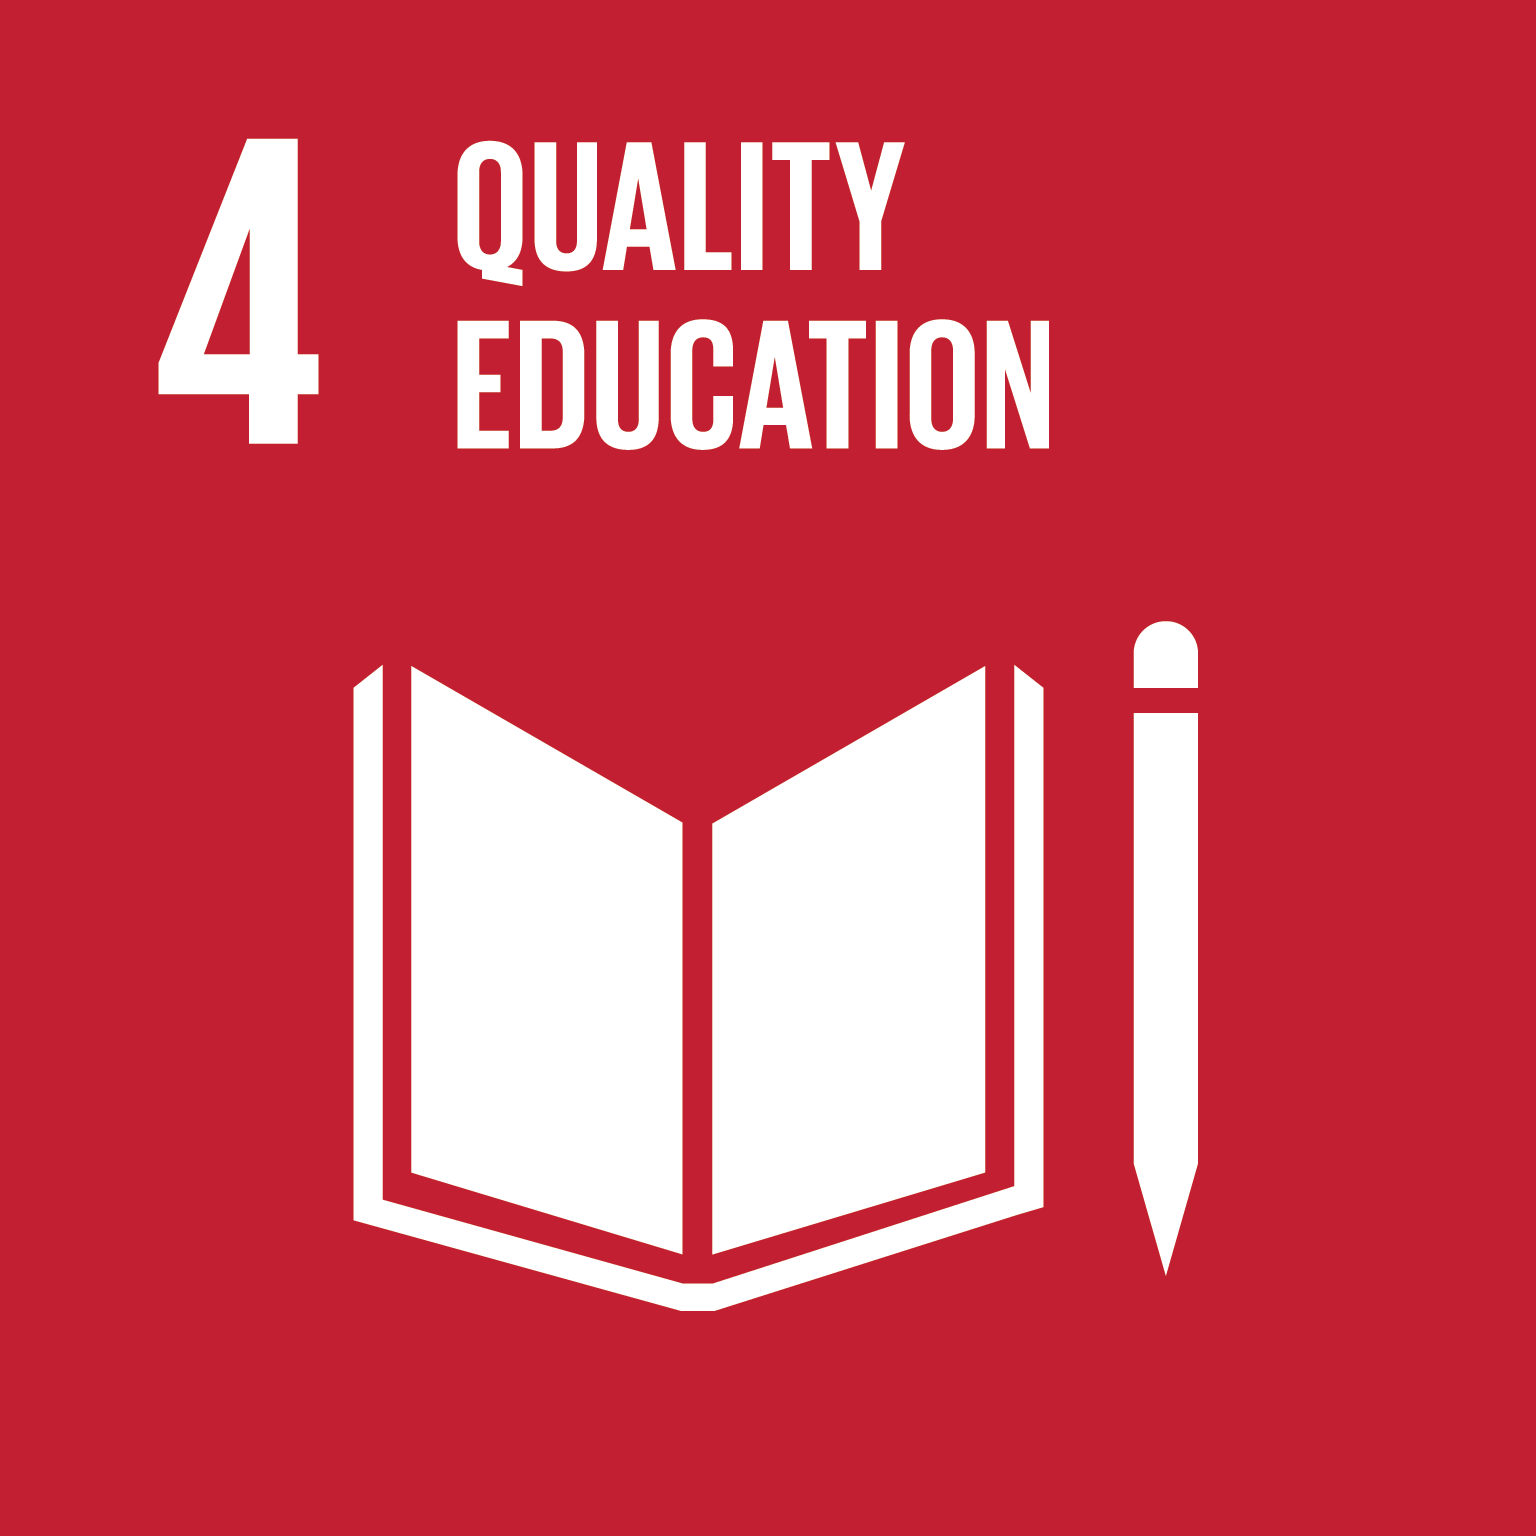 Goal 4. Quality education